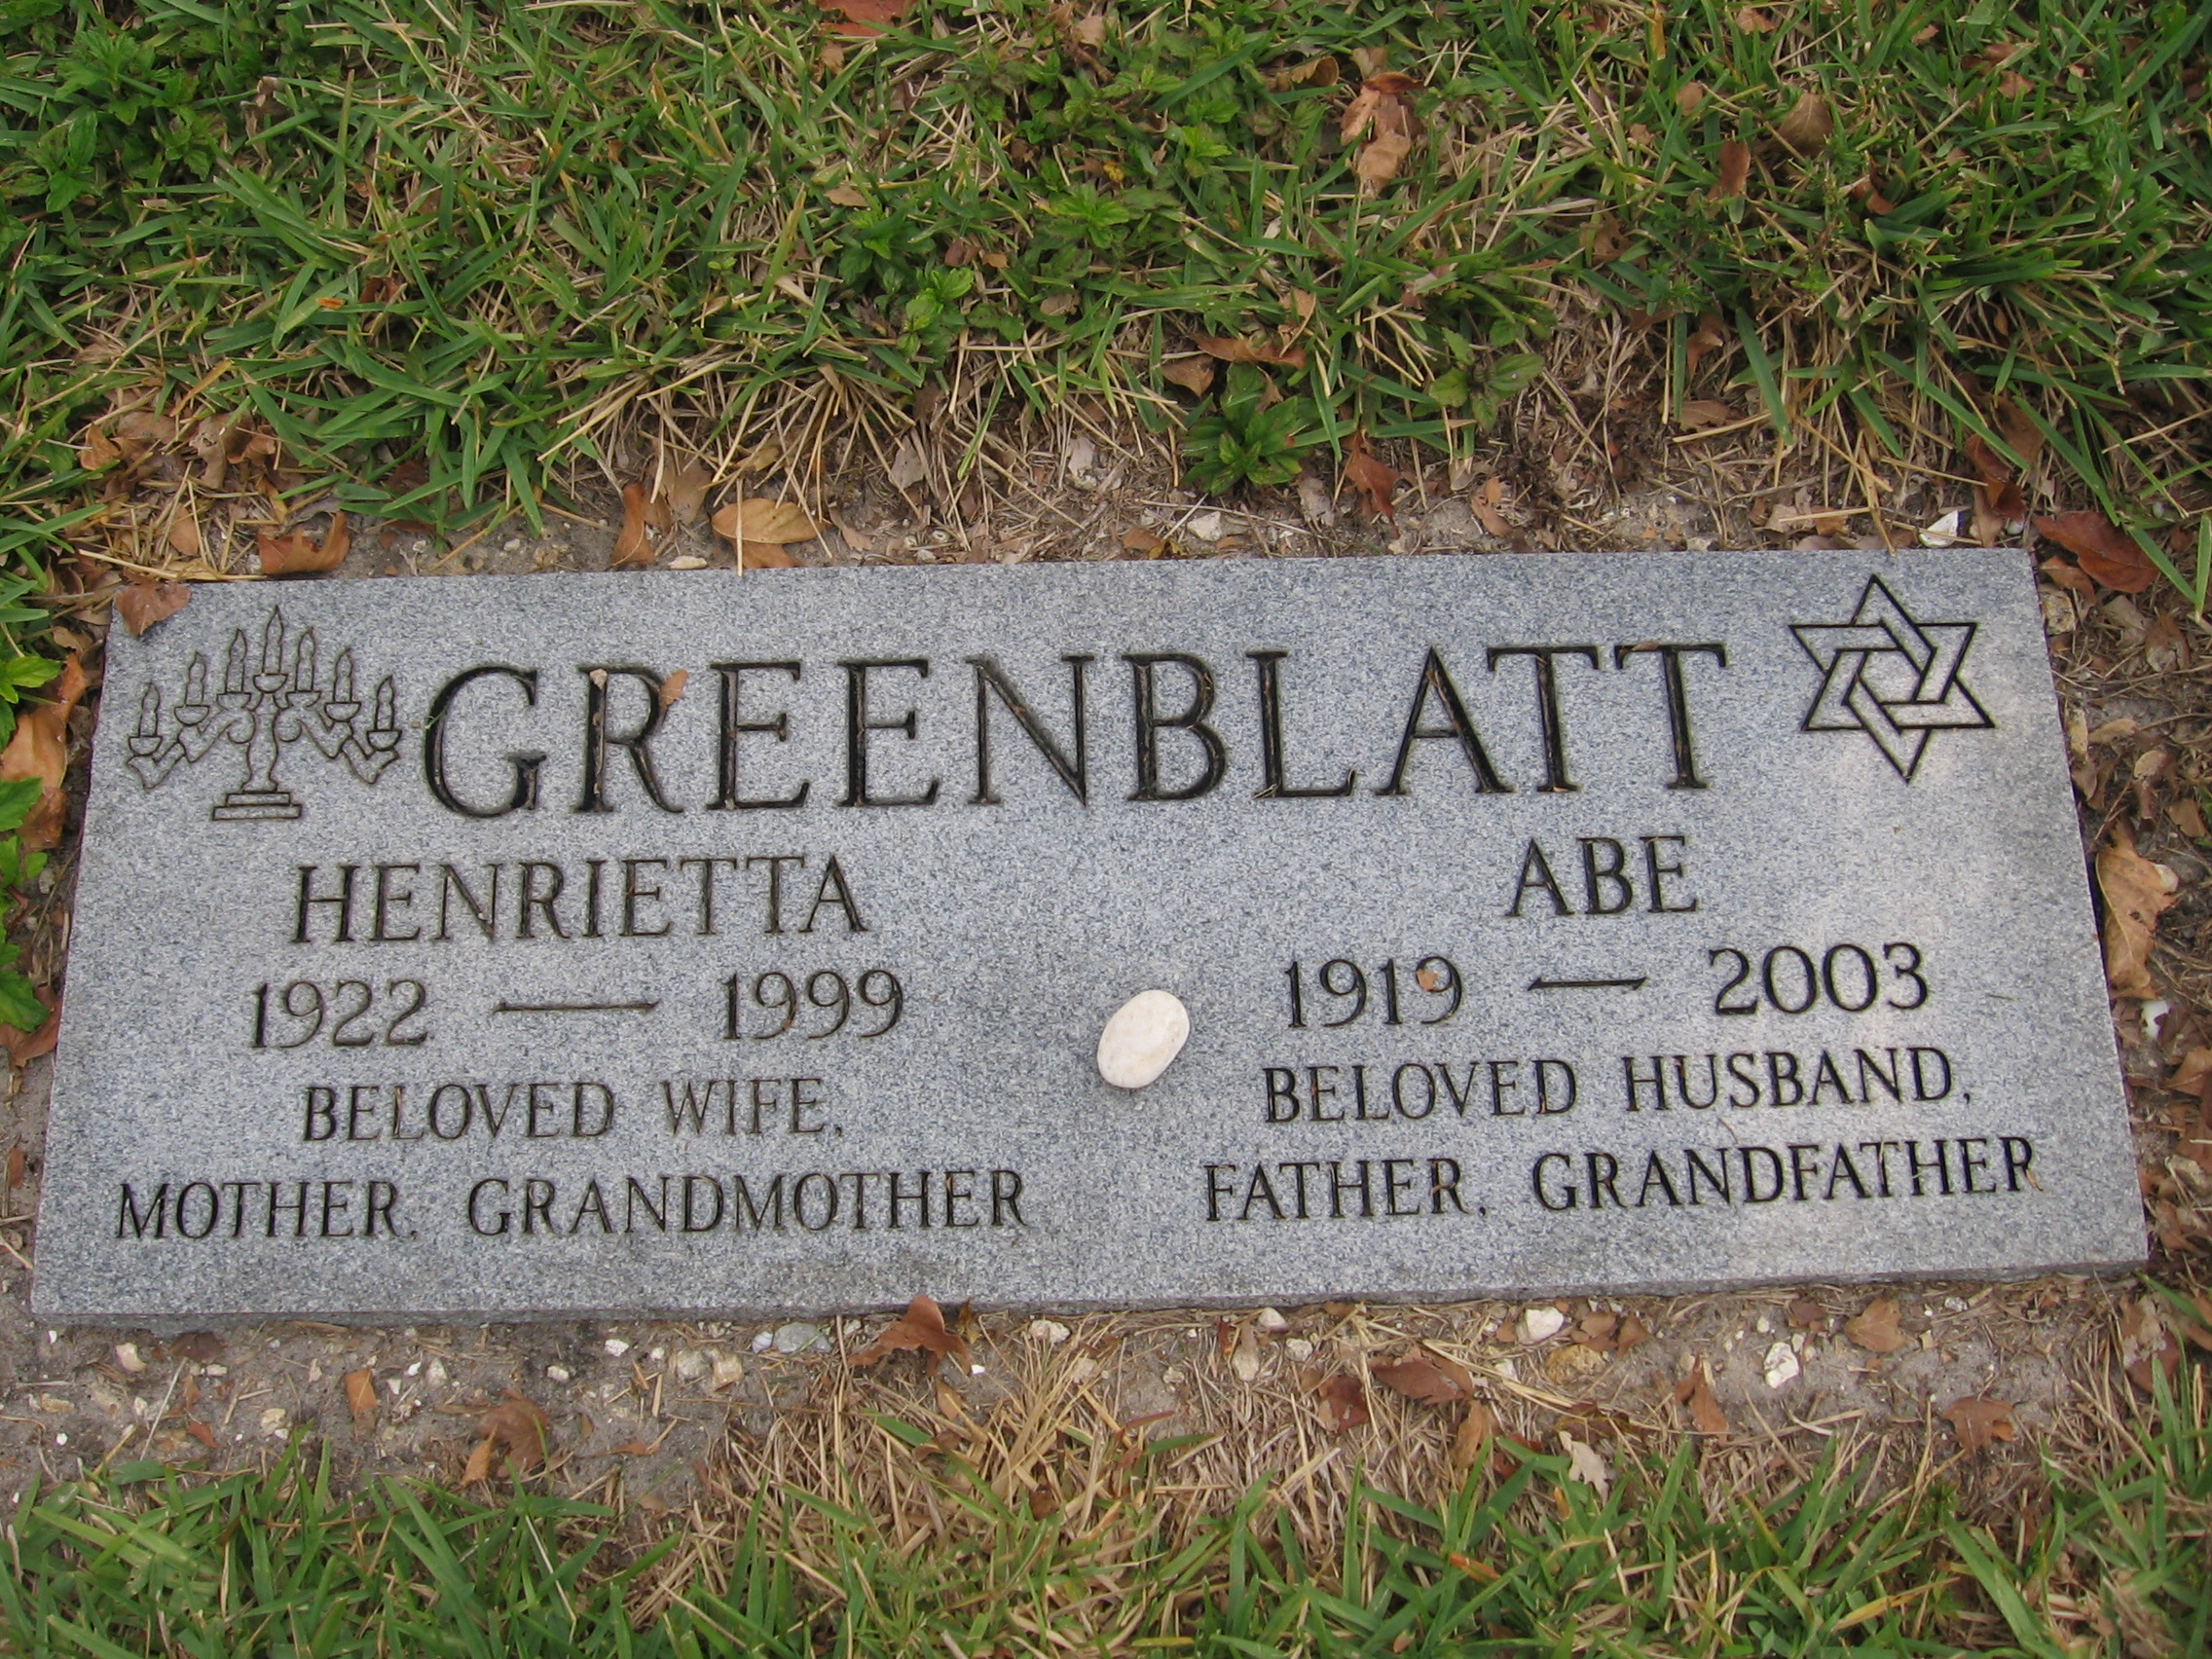 Abe Greenblatt